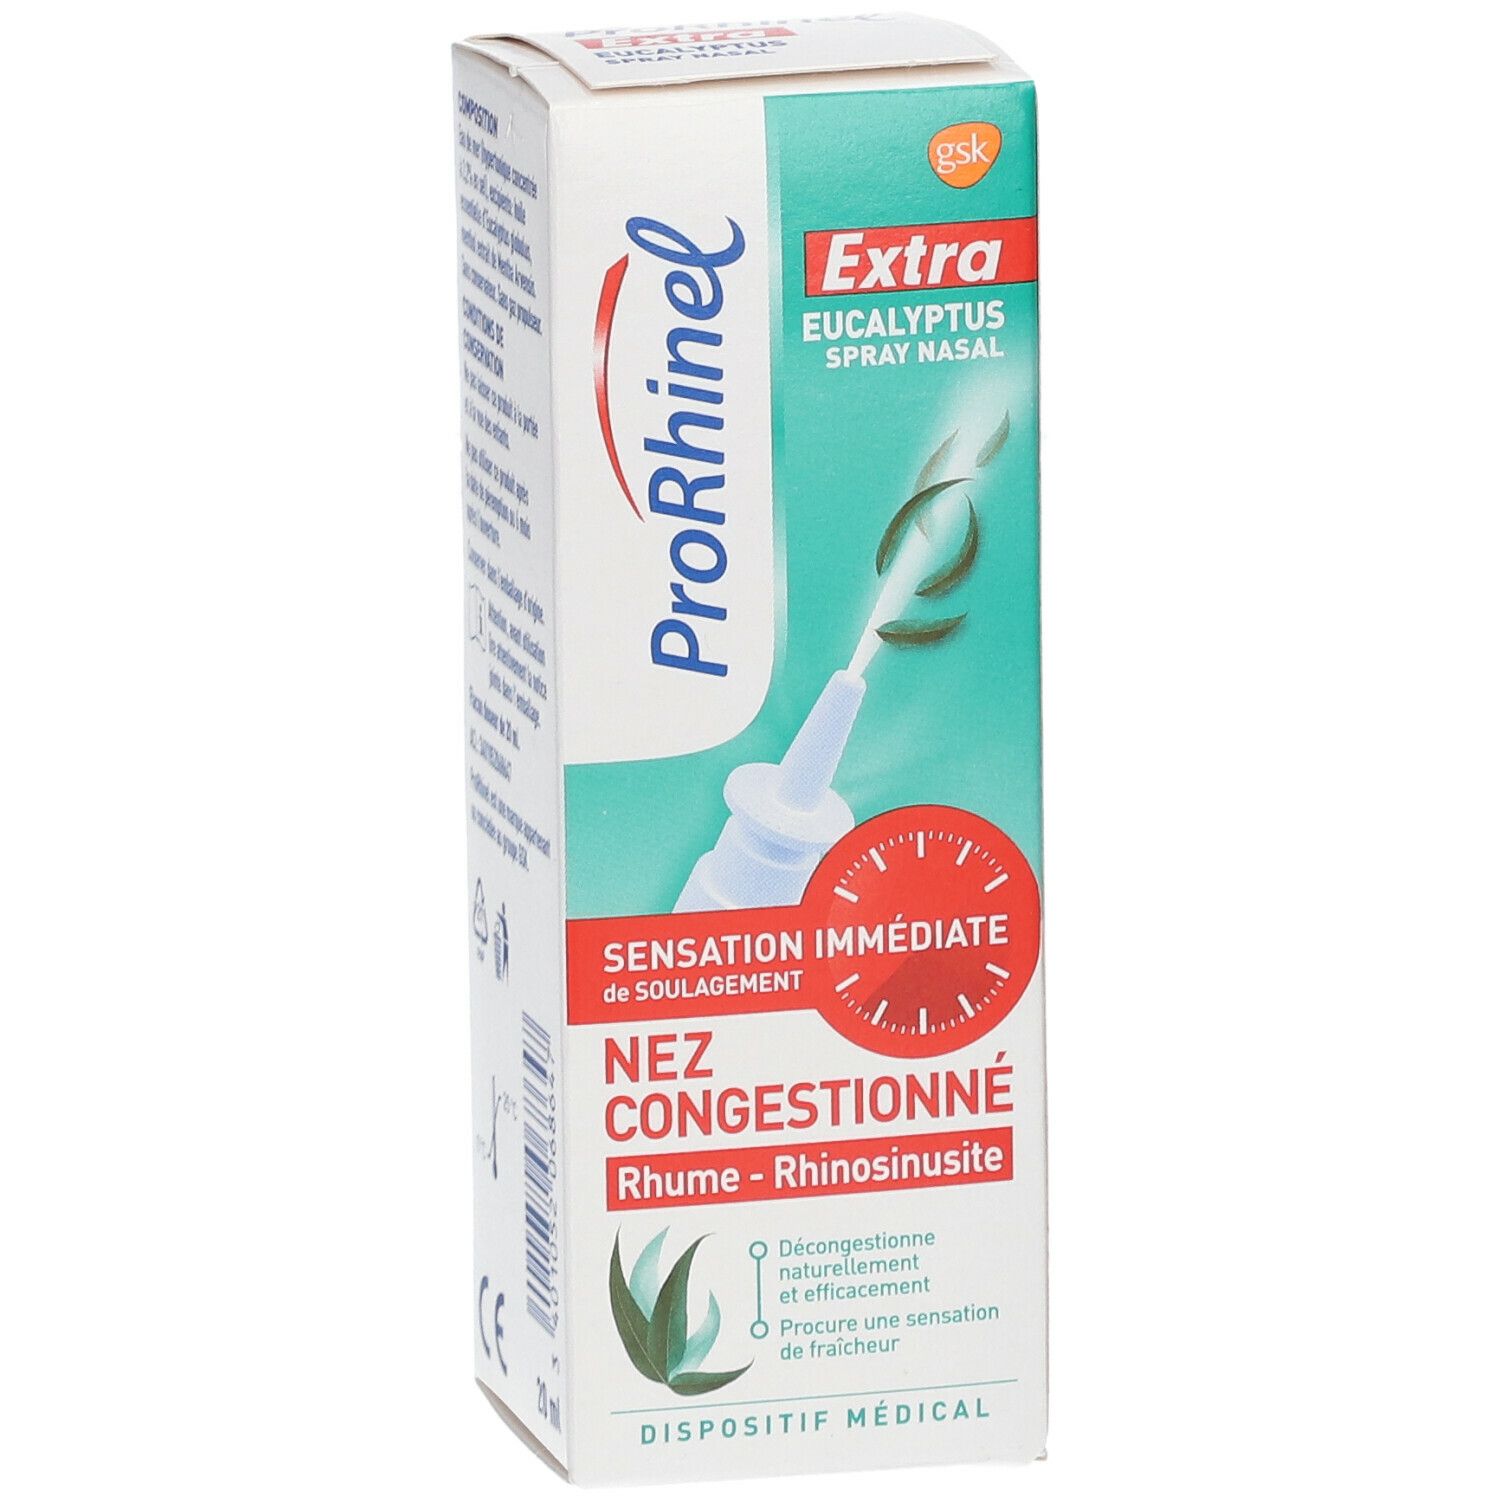 ProRhinel Extra Spray Nasal Eucalyptus 20ml - Cdiscount Santé - Mieux vivre